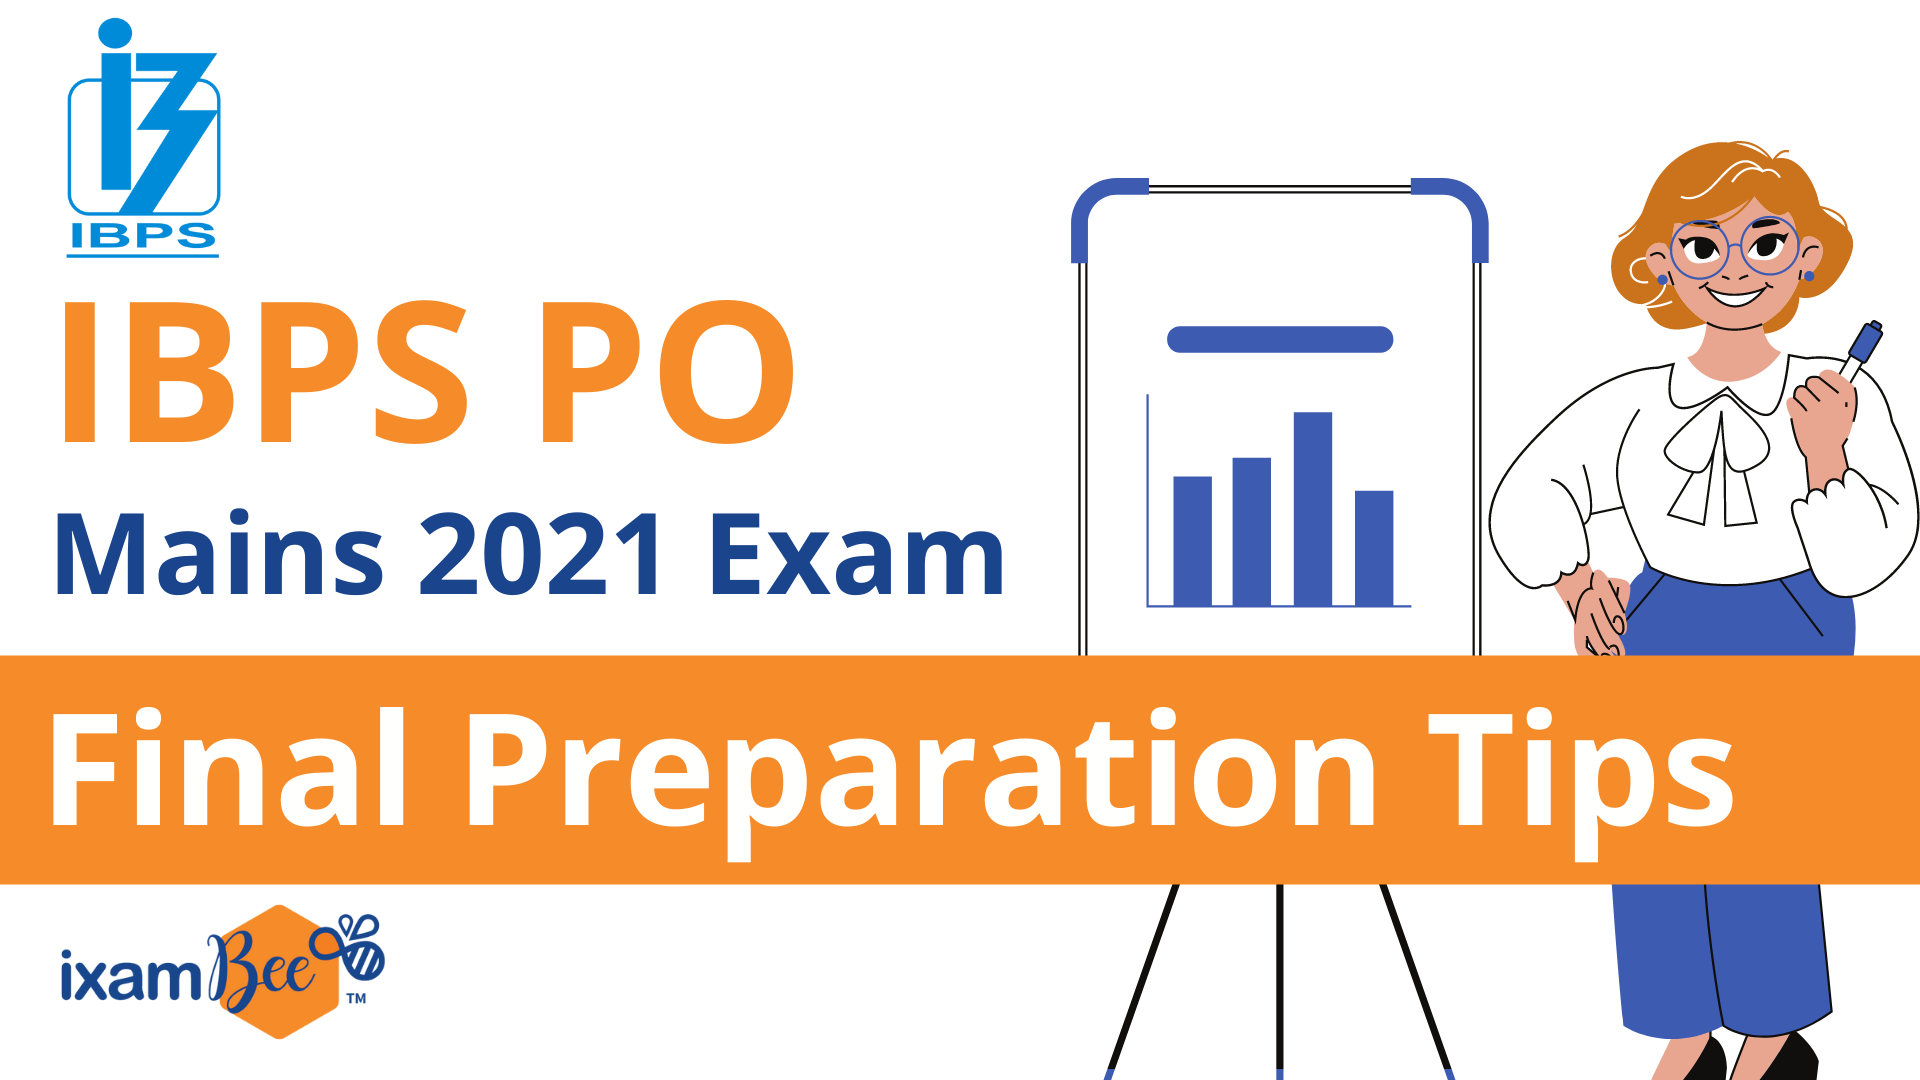 IBPS PO Mains 2021 Exam: Final Preparation Tips